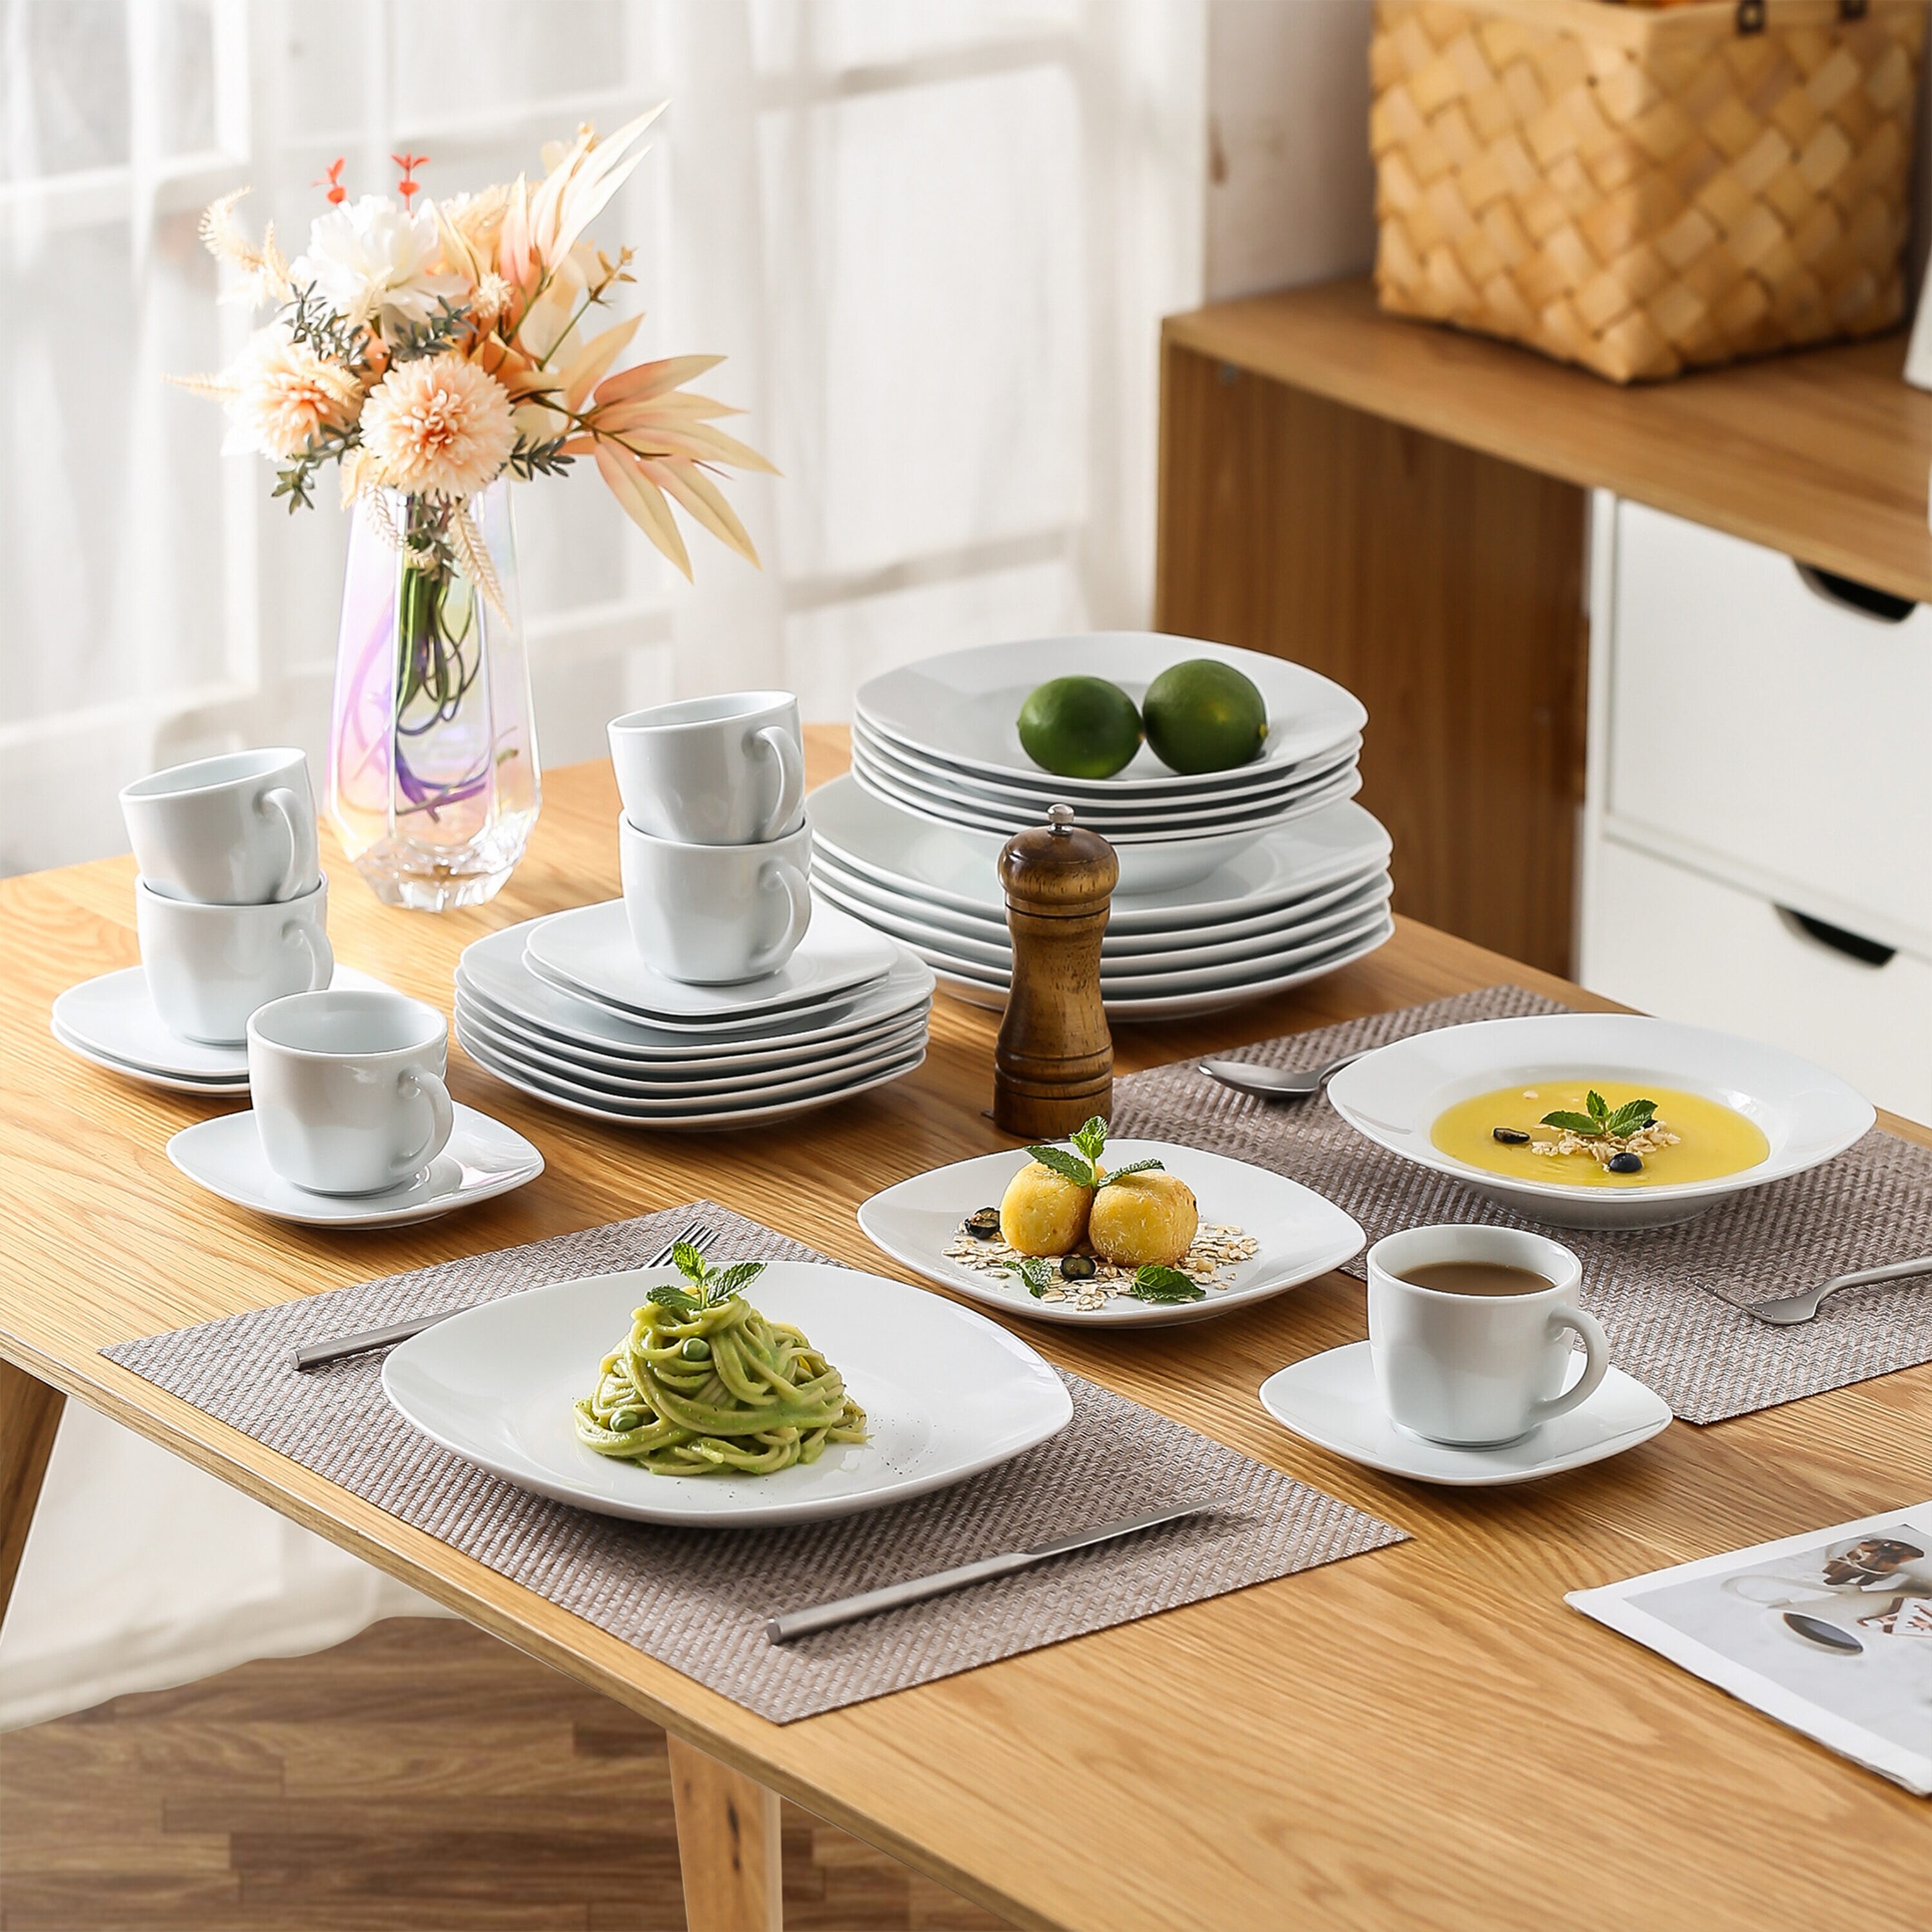 MALACASA Elisa Porcelain Dinnerware Set (Service for 6) - On Sale